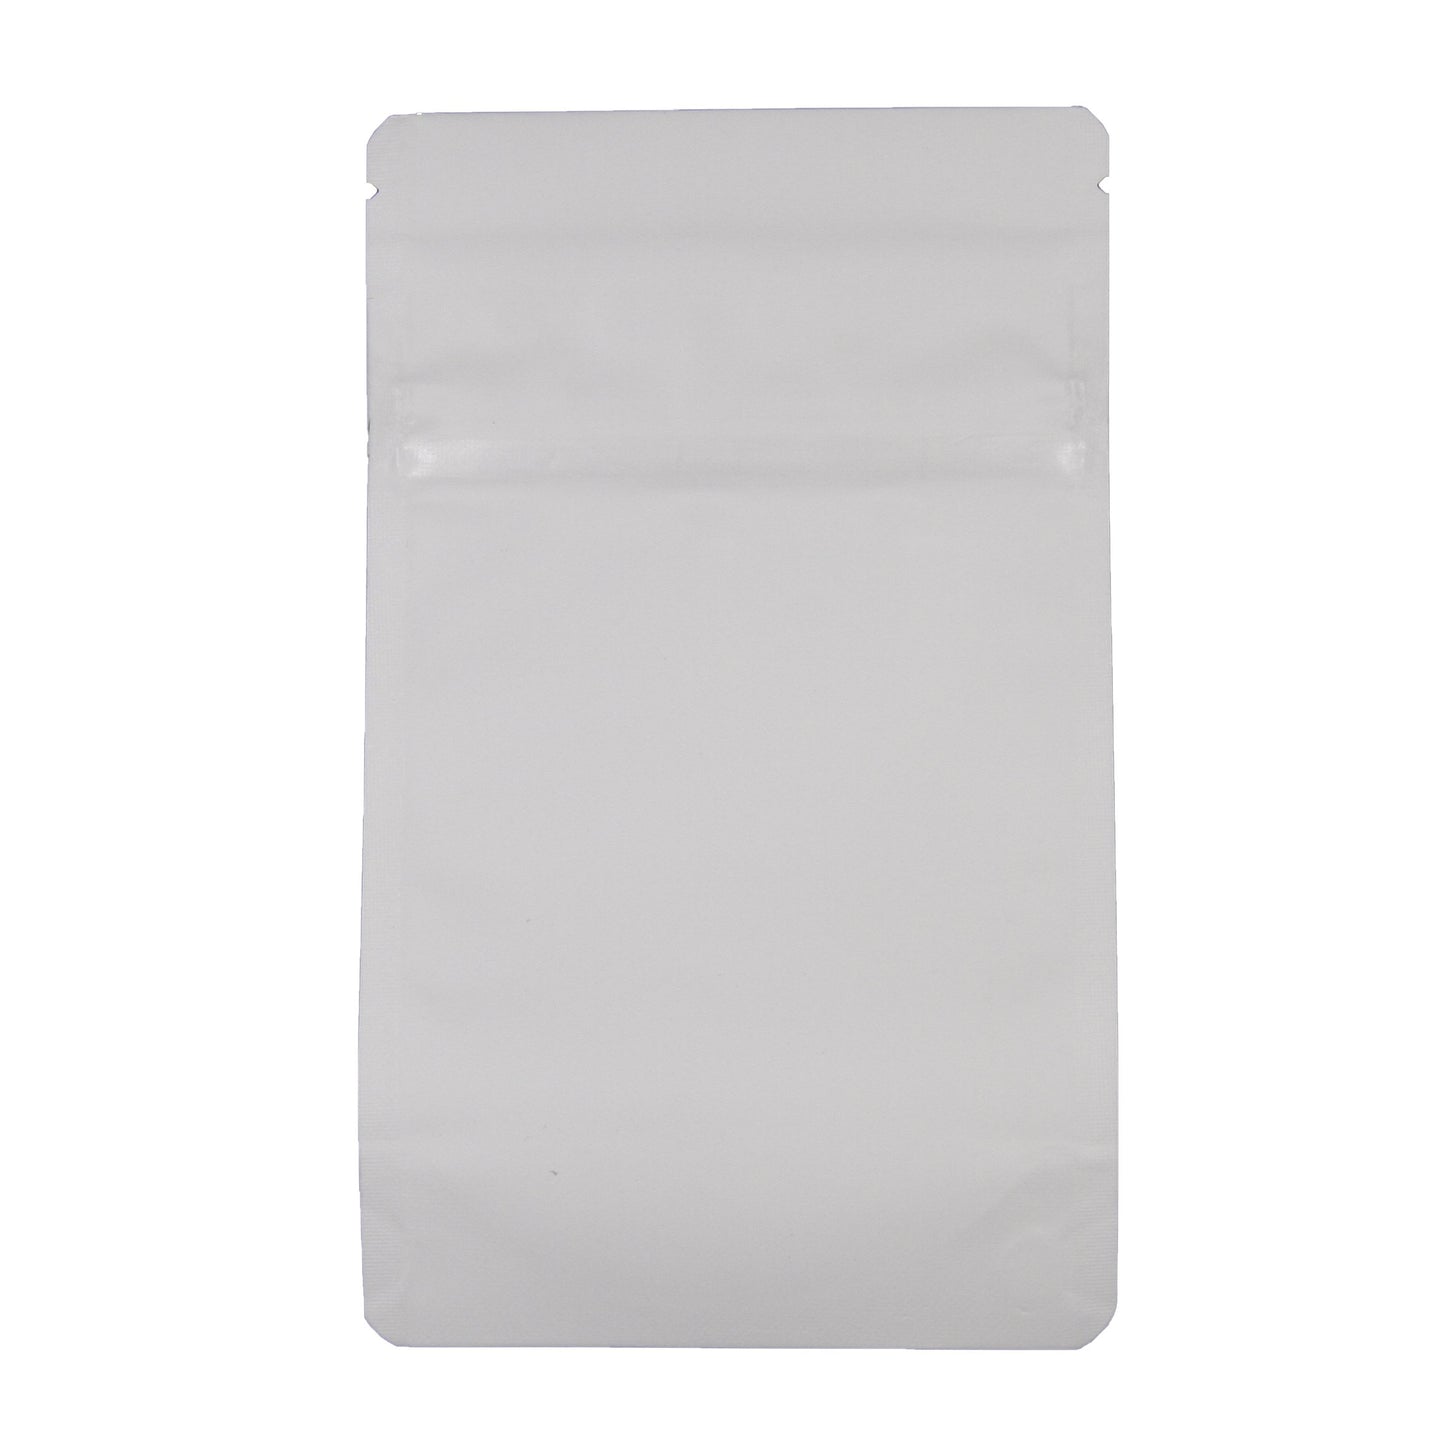 Bag King Child-Resistant Opaque Bag (1/8th oz) Matte White